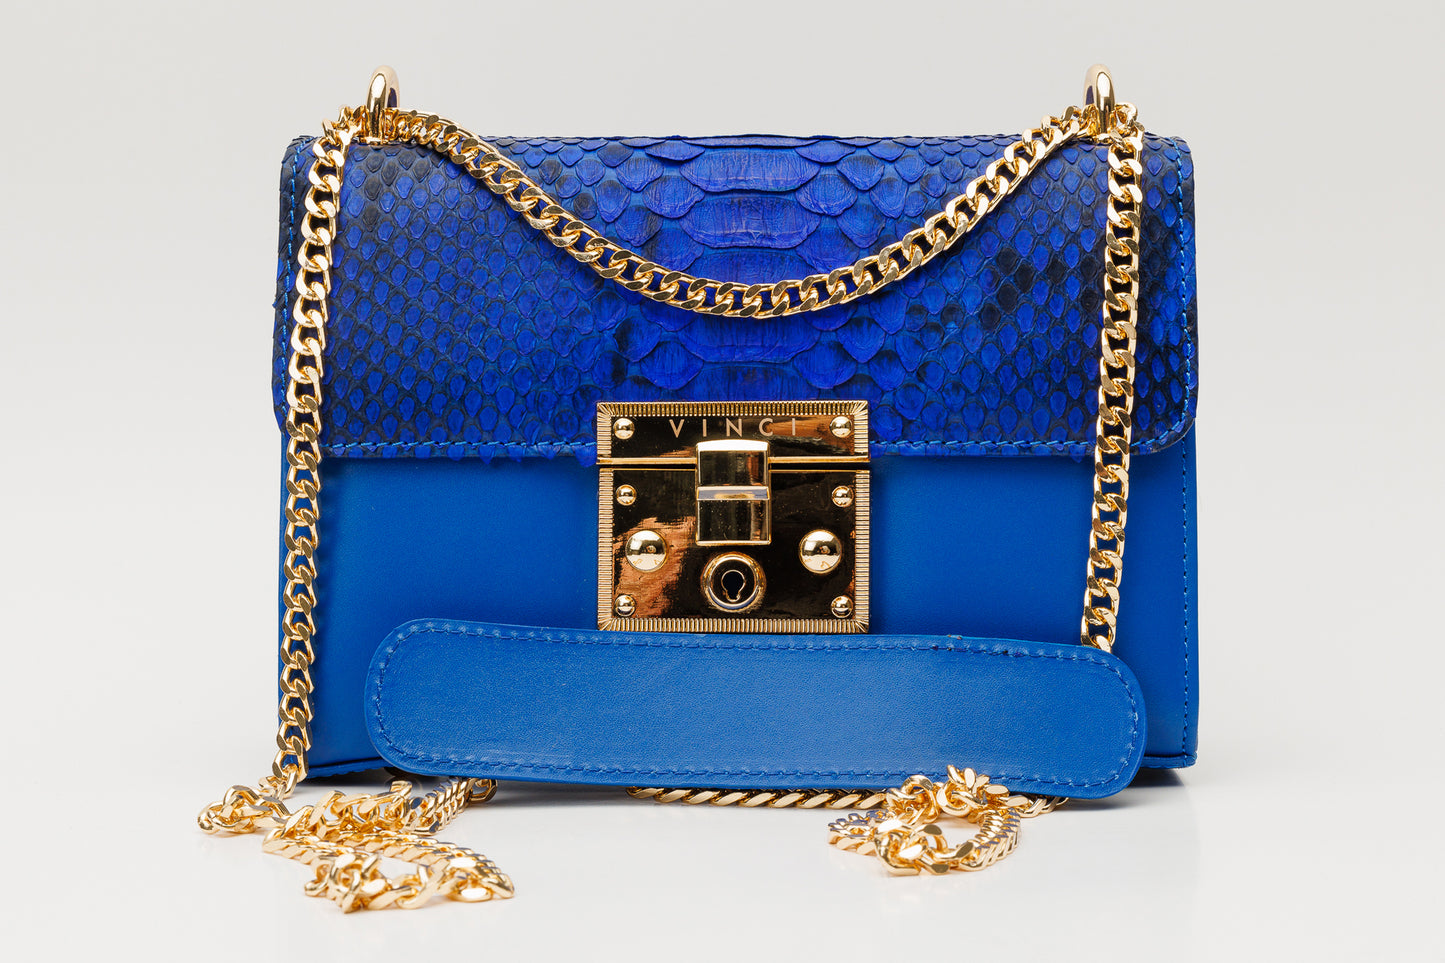 The Toskana Sax Blue Pythn Leather Handbag